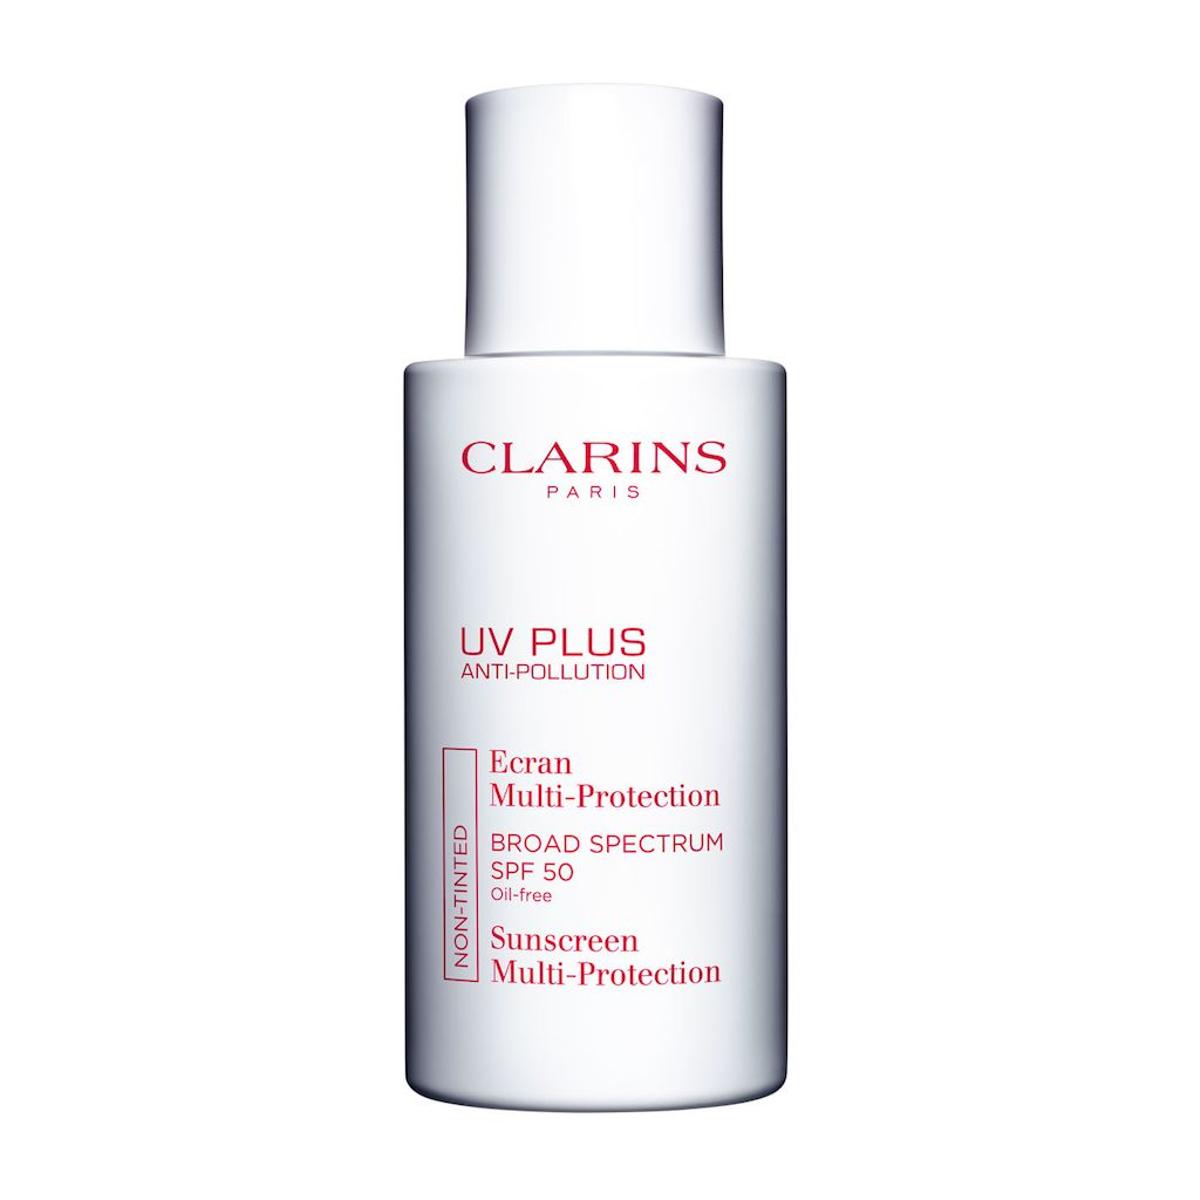 UV Plus Anti-Pollution SPF 50 de Clarins